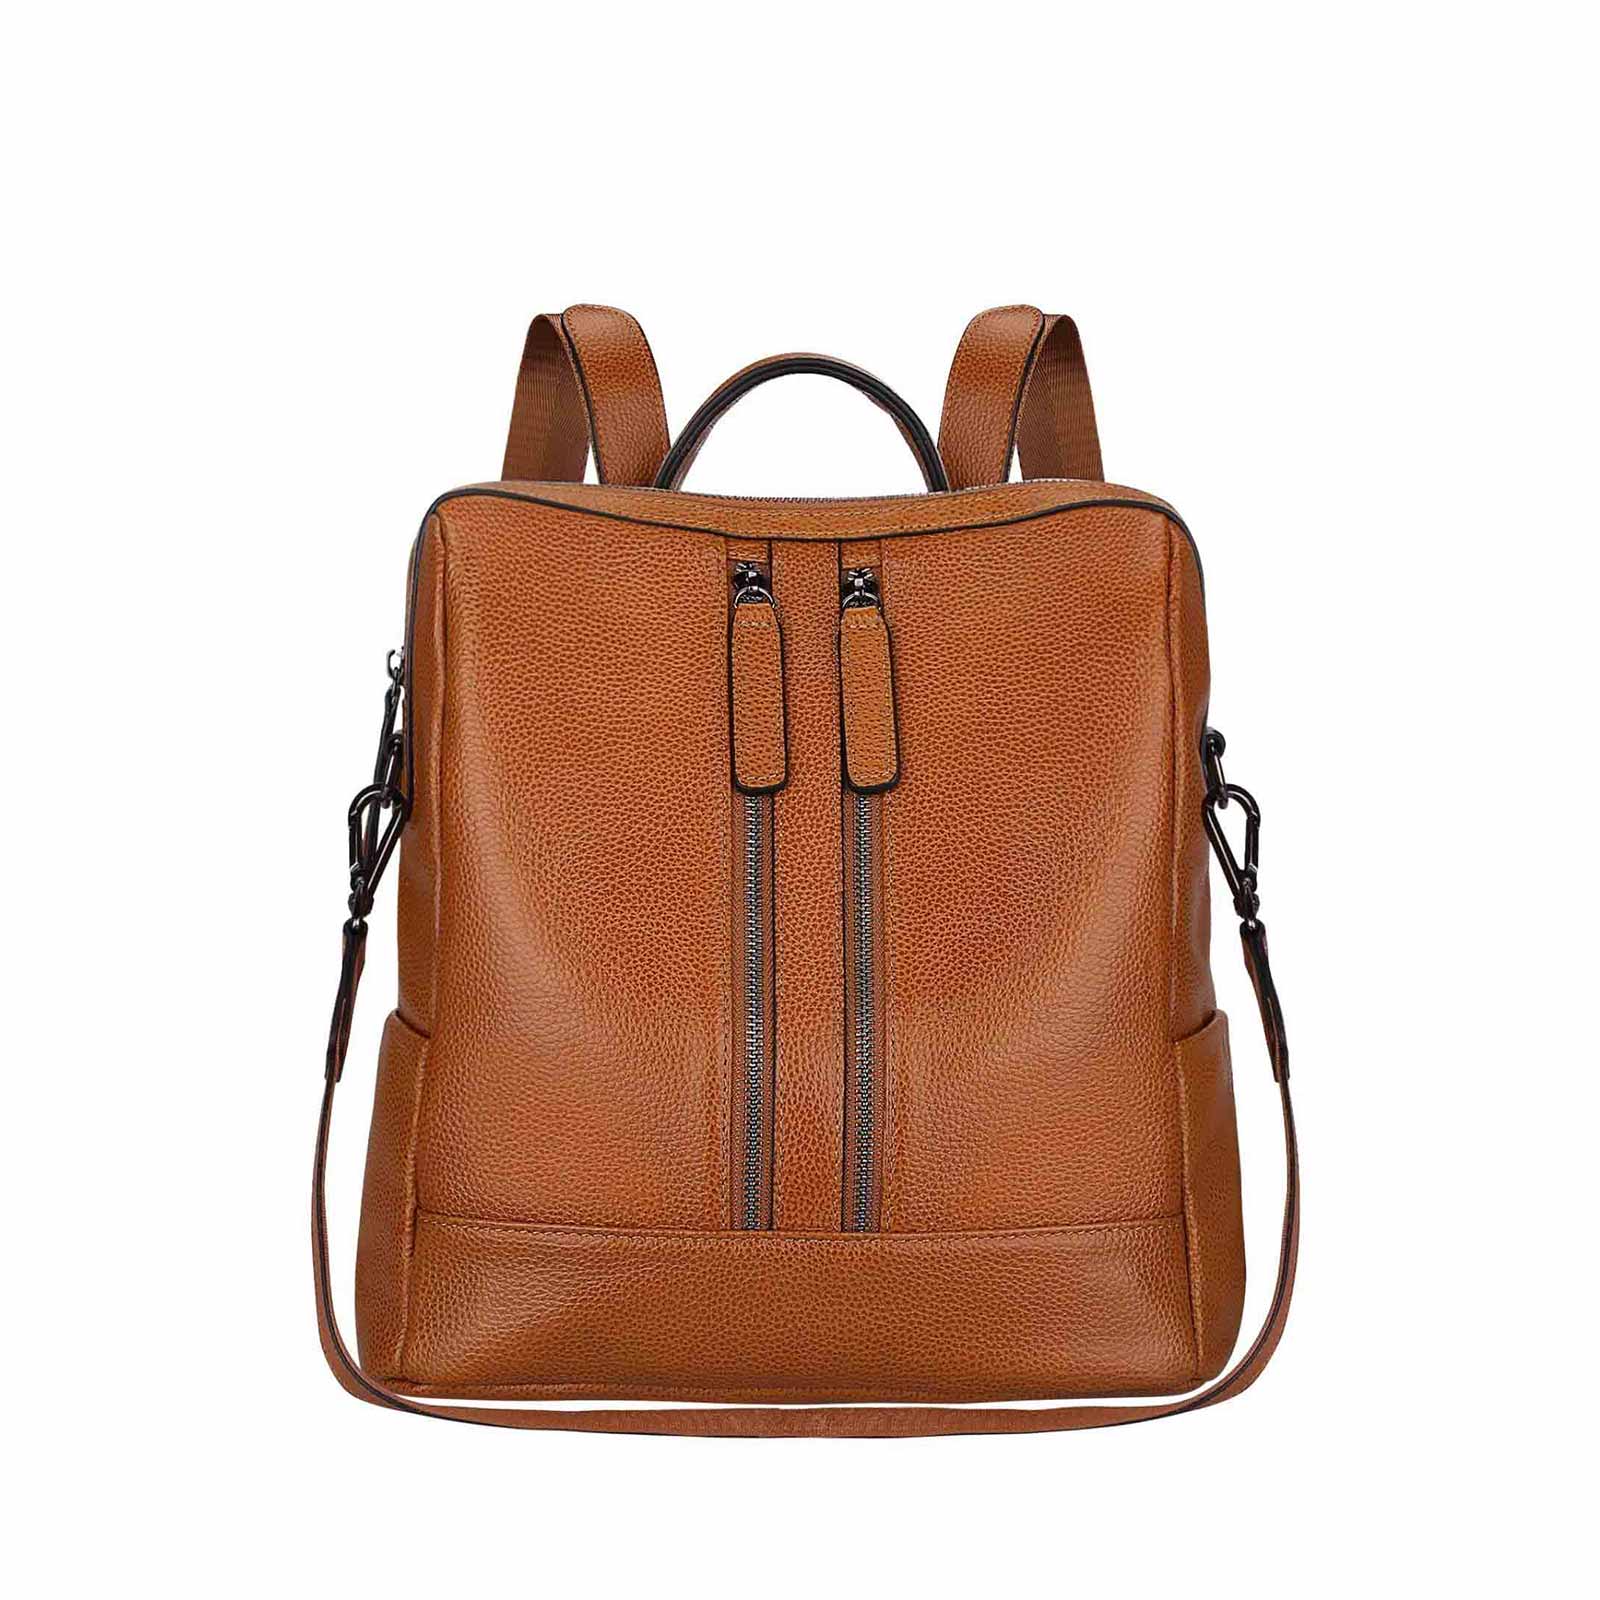 S-ZONE Leather Tote Bag for Women Office Shoulder Handbag 15.6 Inch Work  Laptop Briefcase